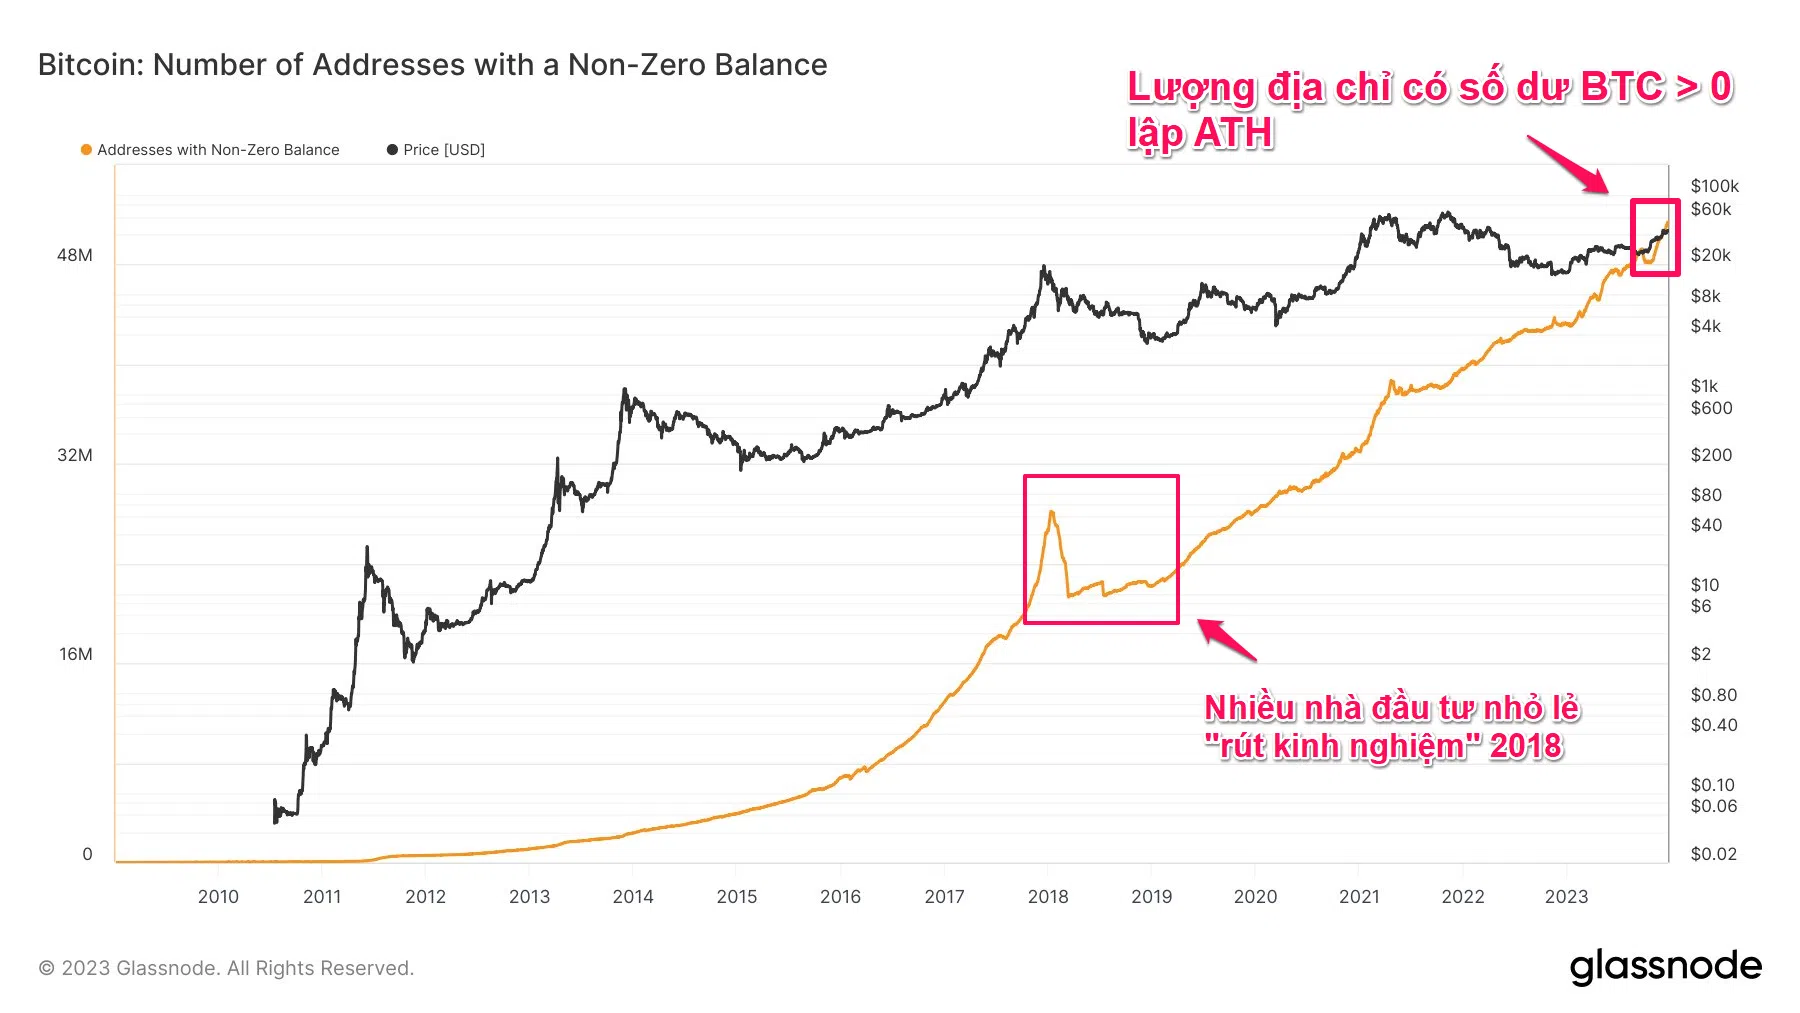 dia-chi-bitcoin-non-zero-2023-png.webp